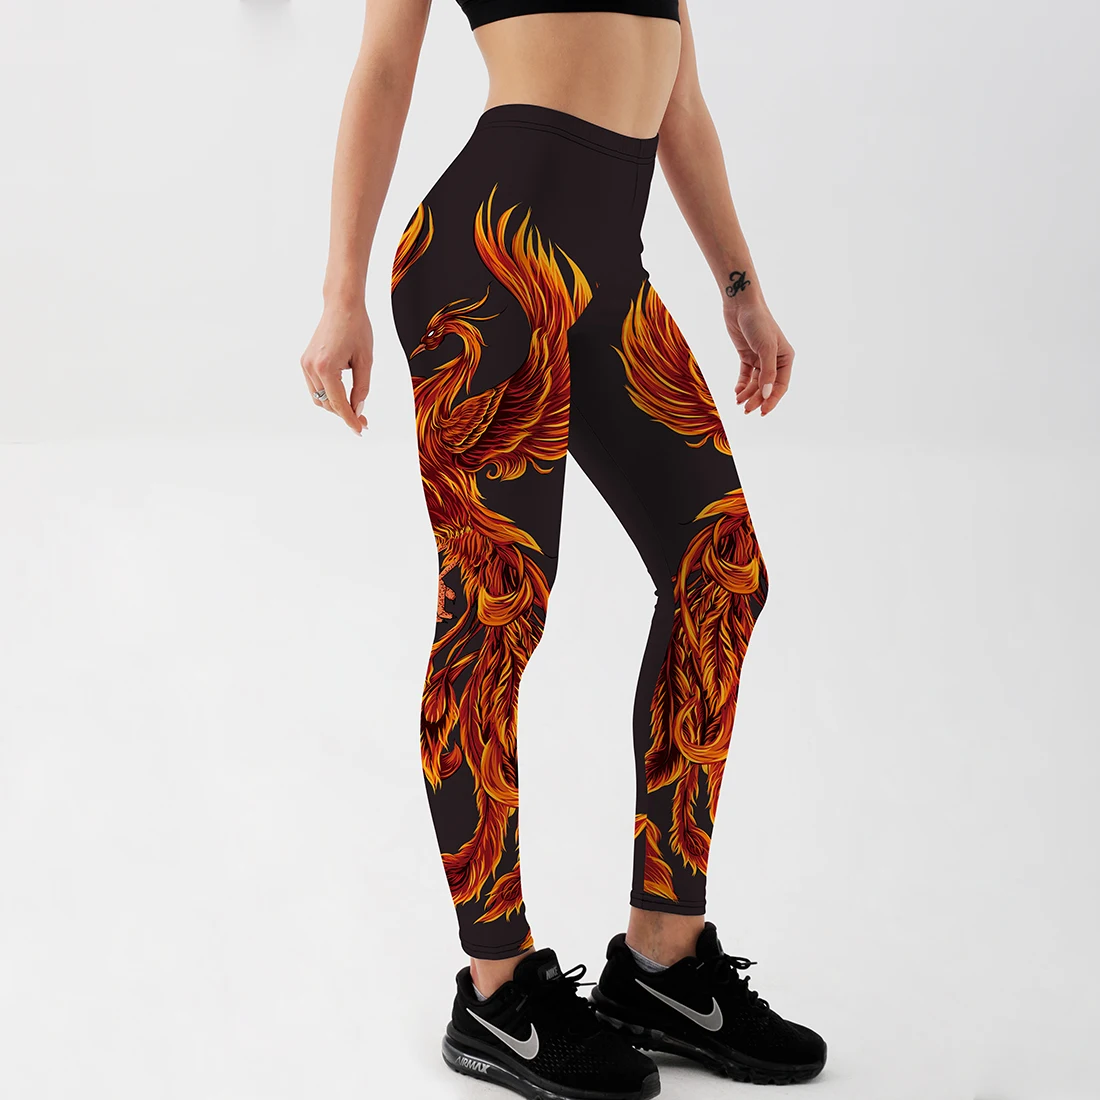 Qickitout Hot Sale Women Leggings Flaming Phoenix 3D Printed Punk Girl Leggings Pants Fitness Workout Pants Long Stretchy S-4Xl